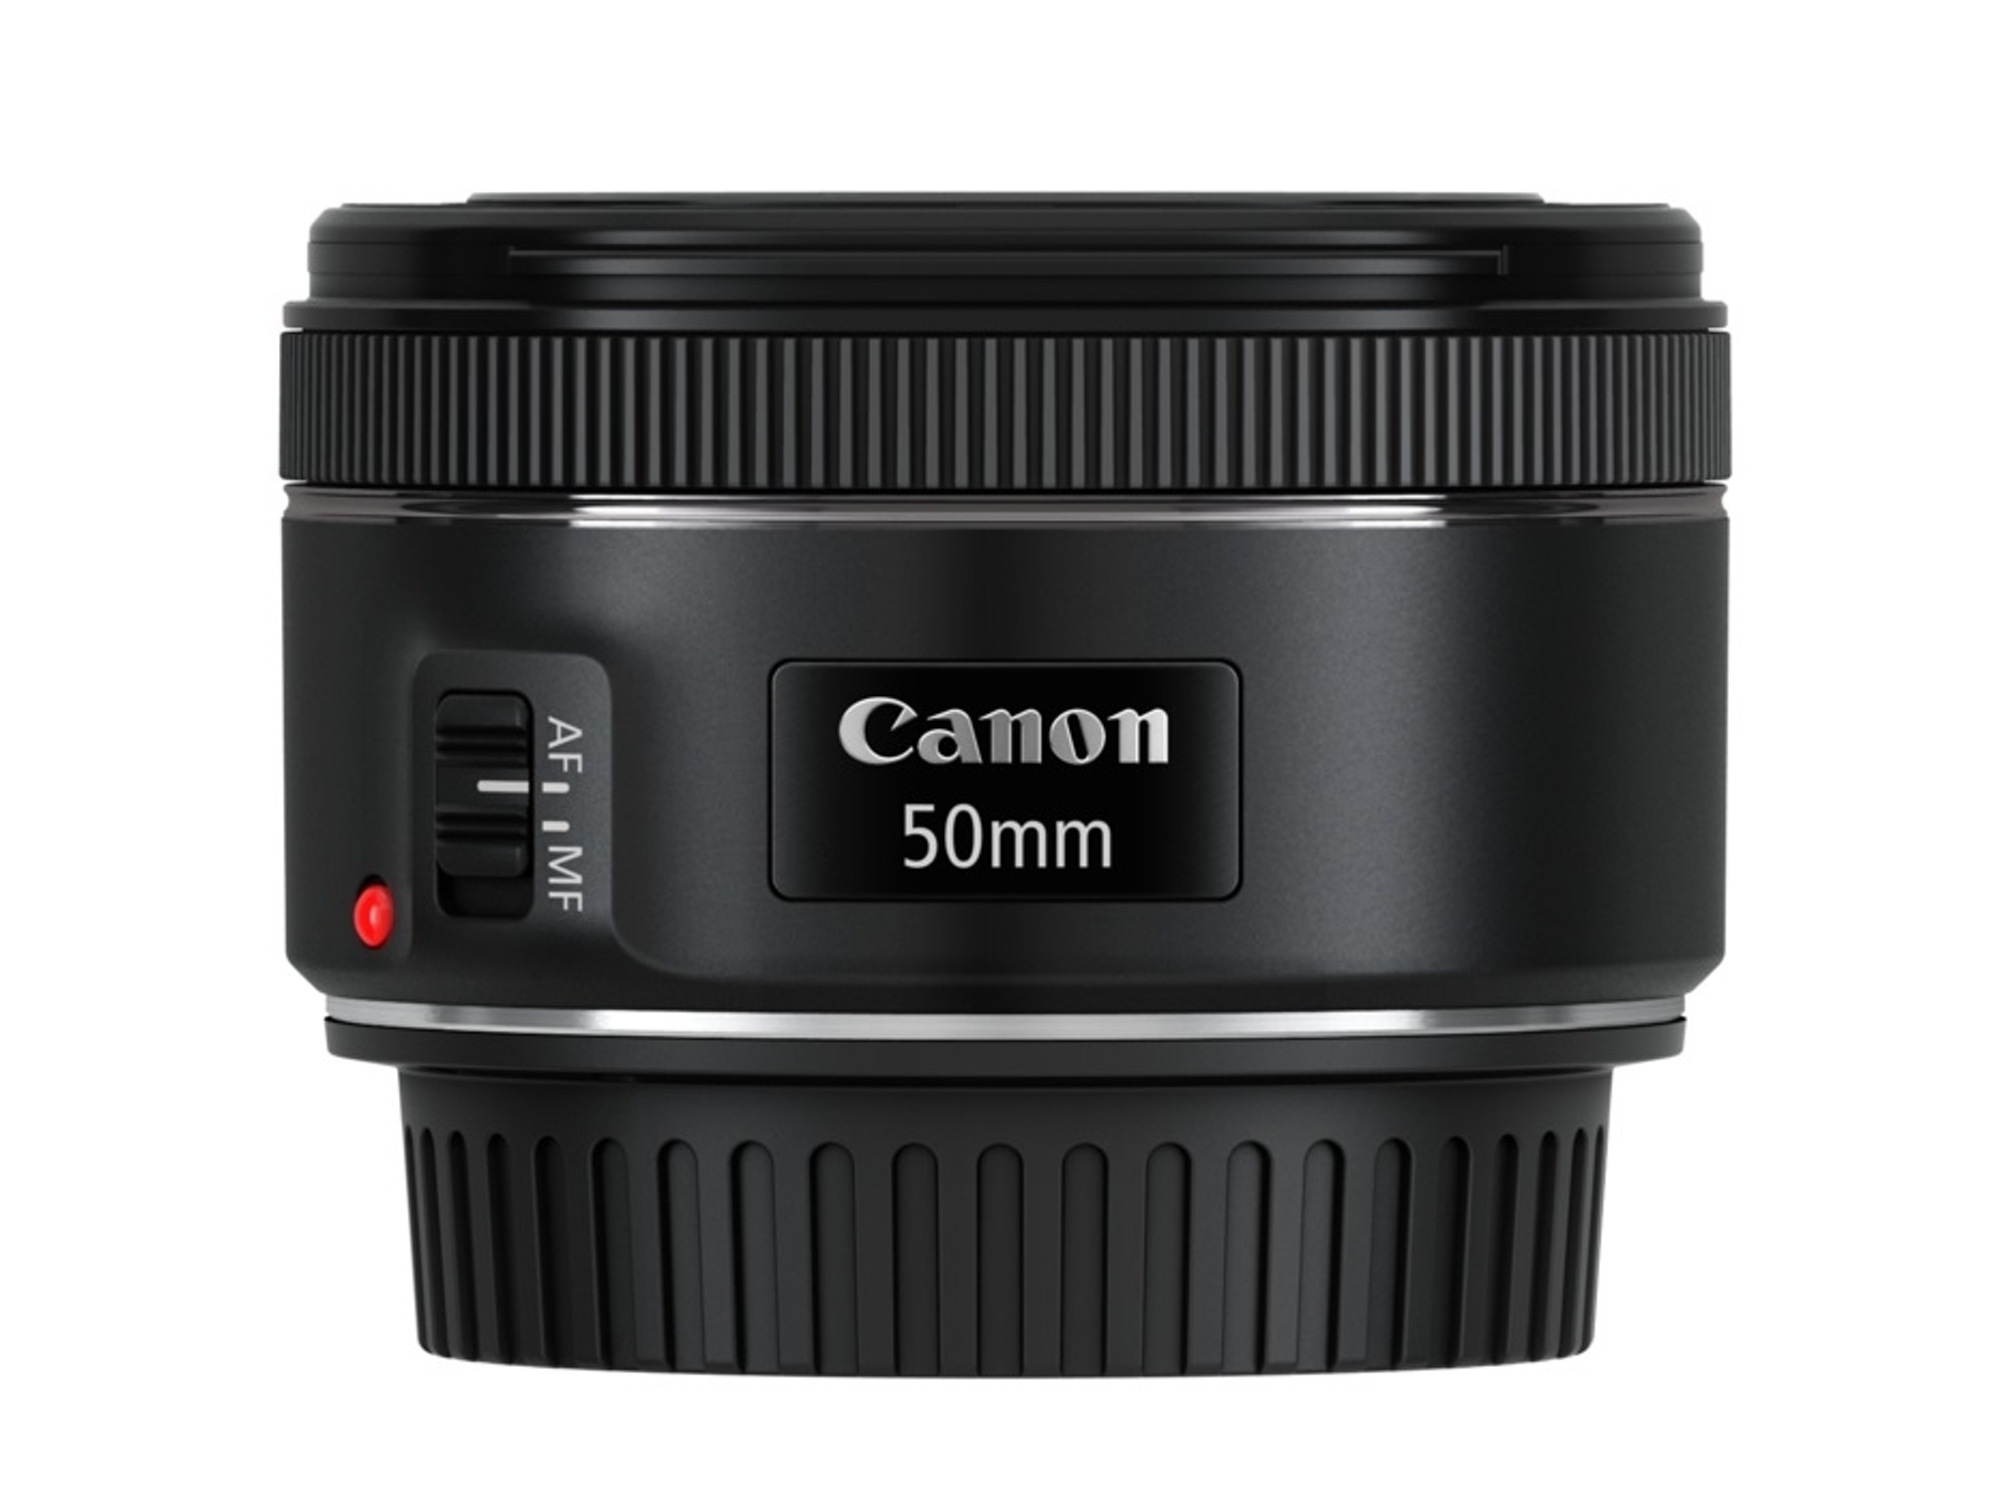 Objetivo CANON Ef 50mm F1.8 Stm (Encaje: Canon EF - Apertura: f/1.8 - f/22)